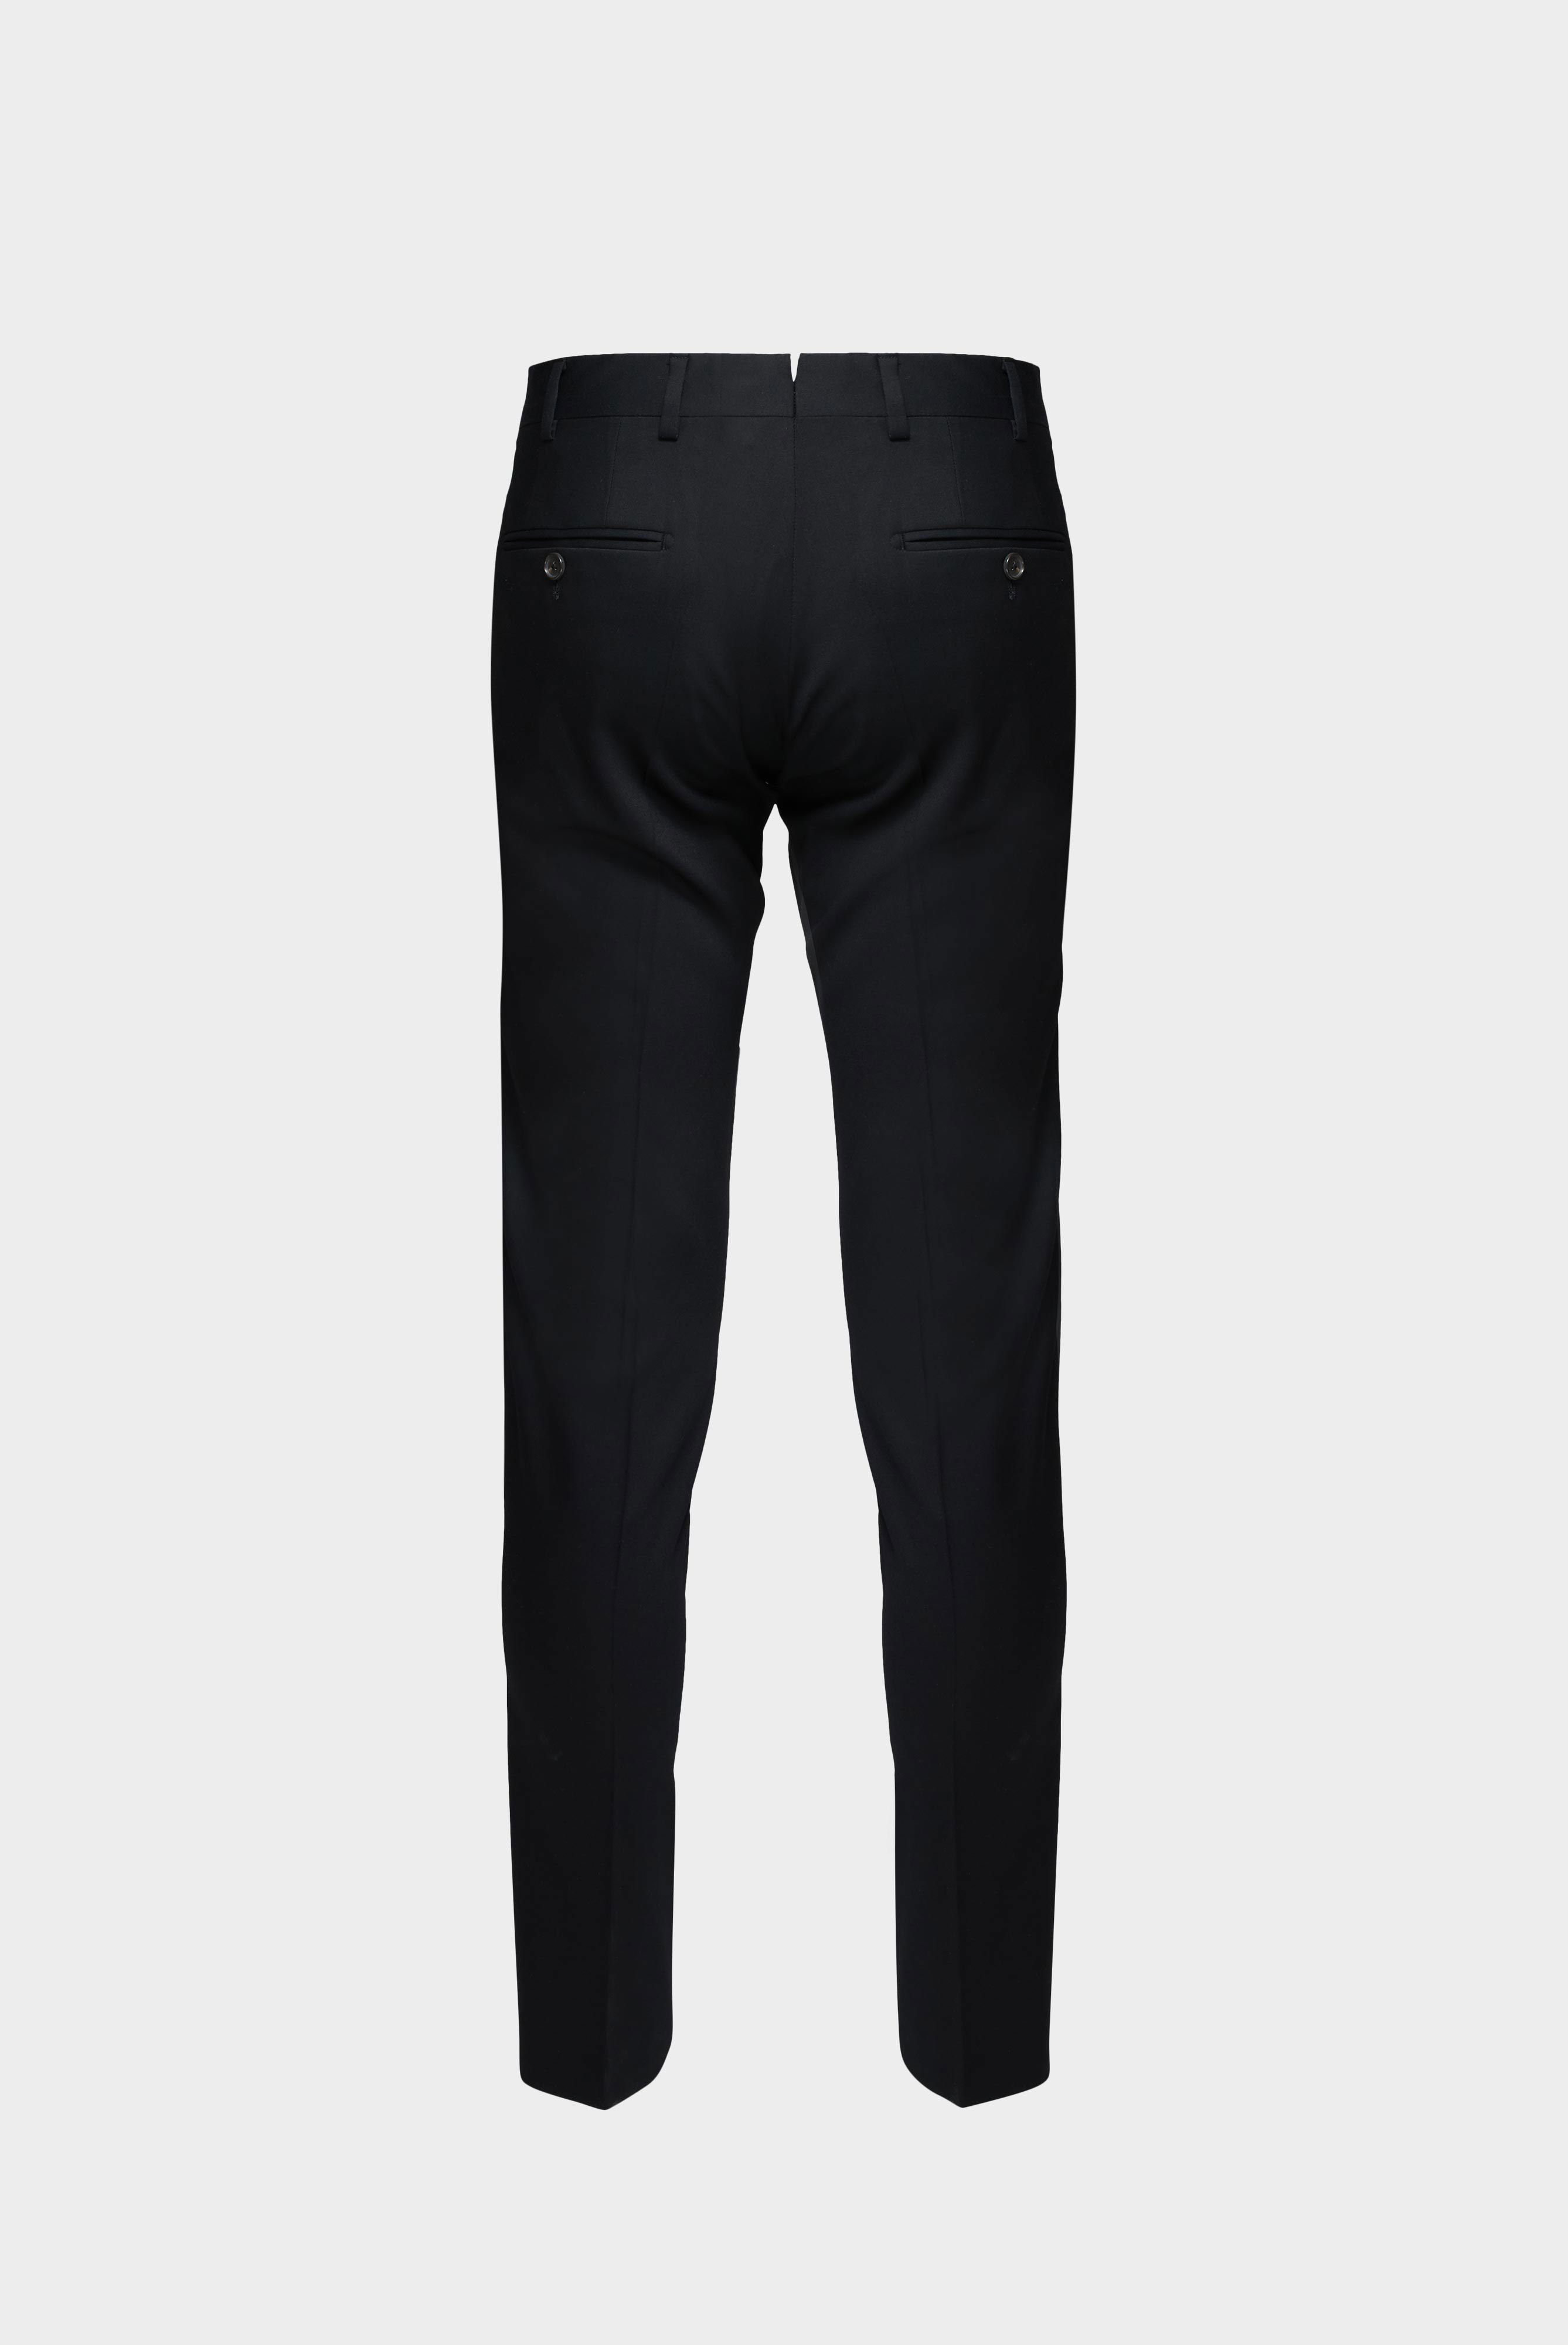 Jeans & Hosen+Hose aus Wolle Slim Fit+20.7880.16.H01010.099.90